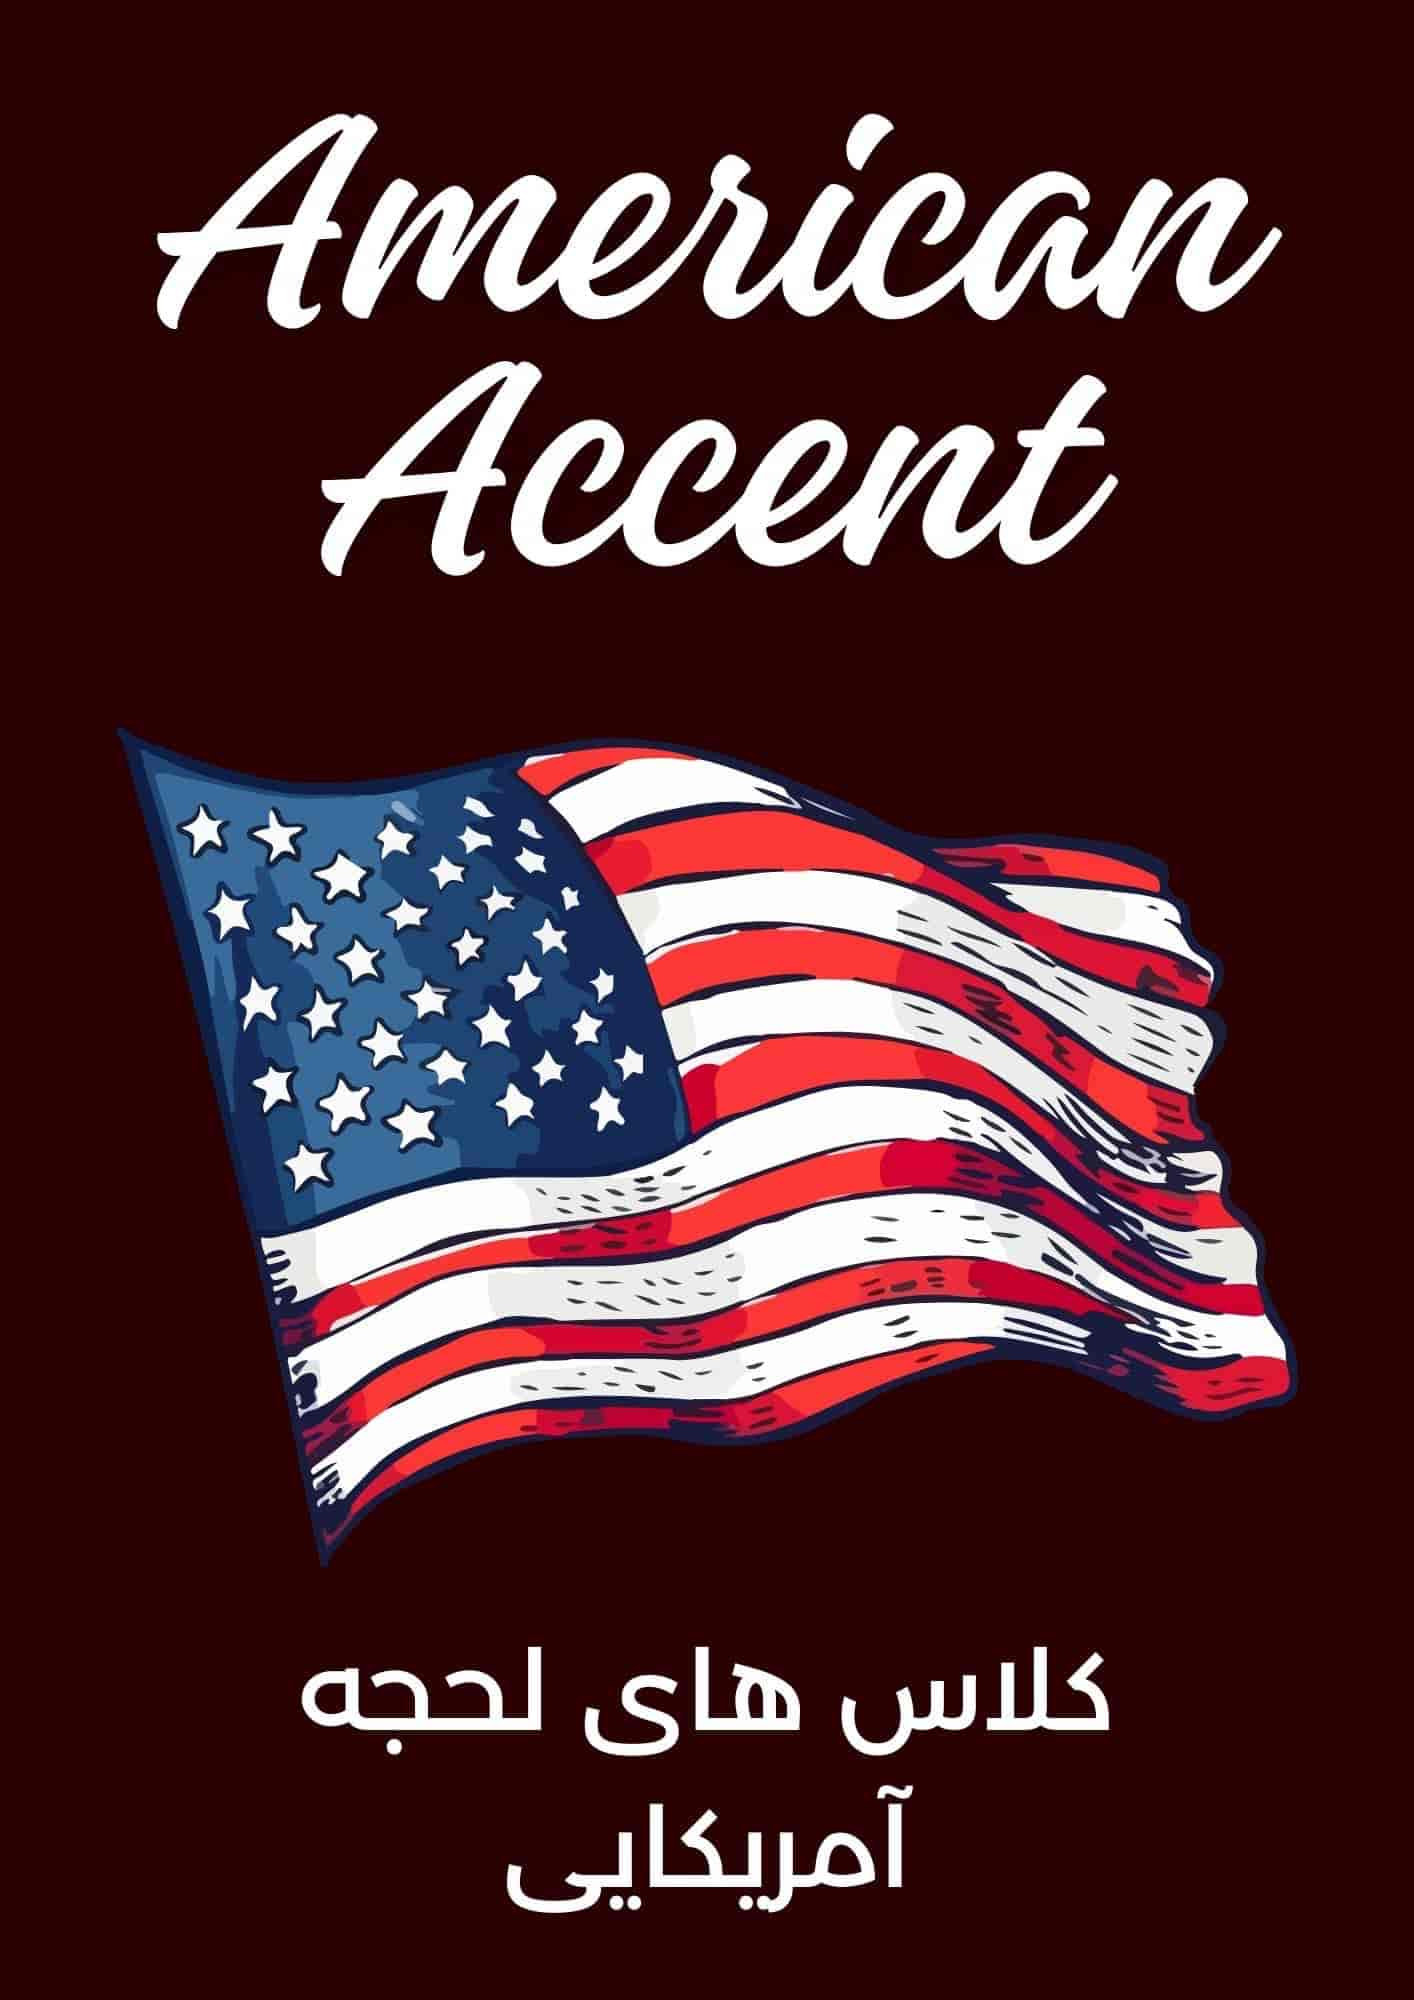 American Accent training